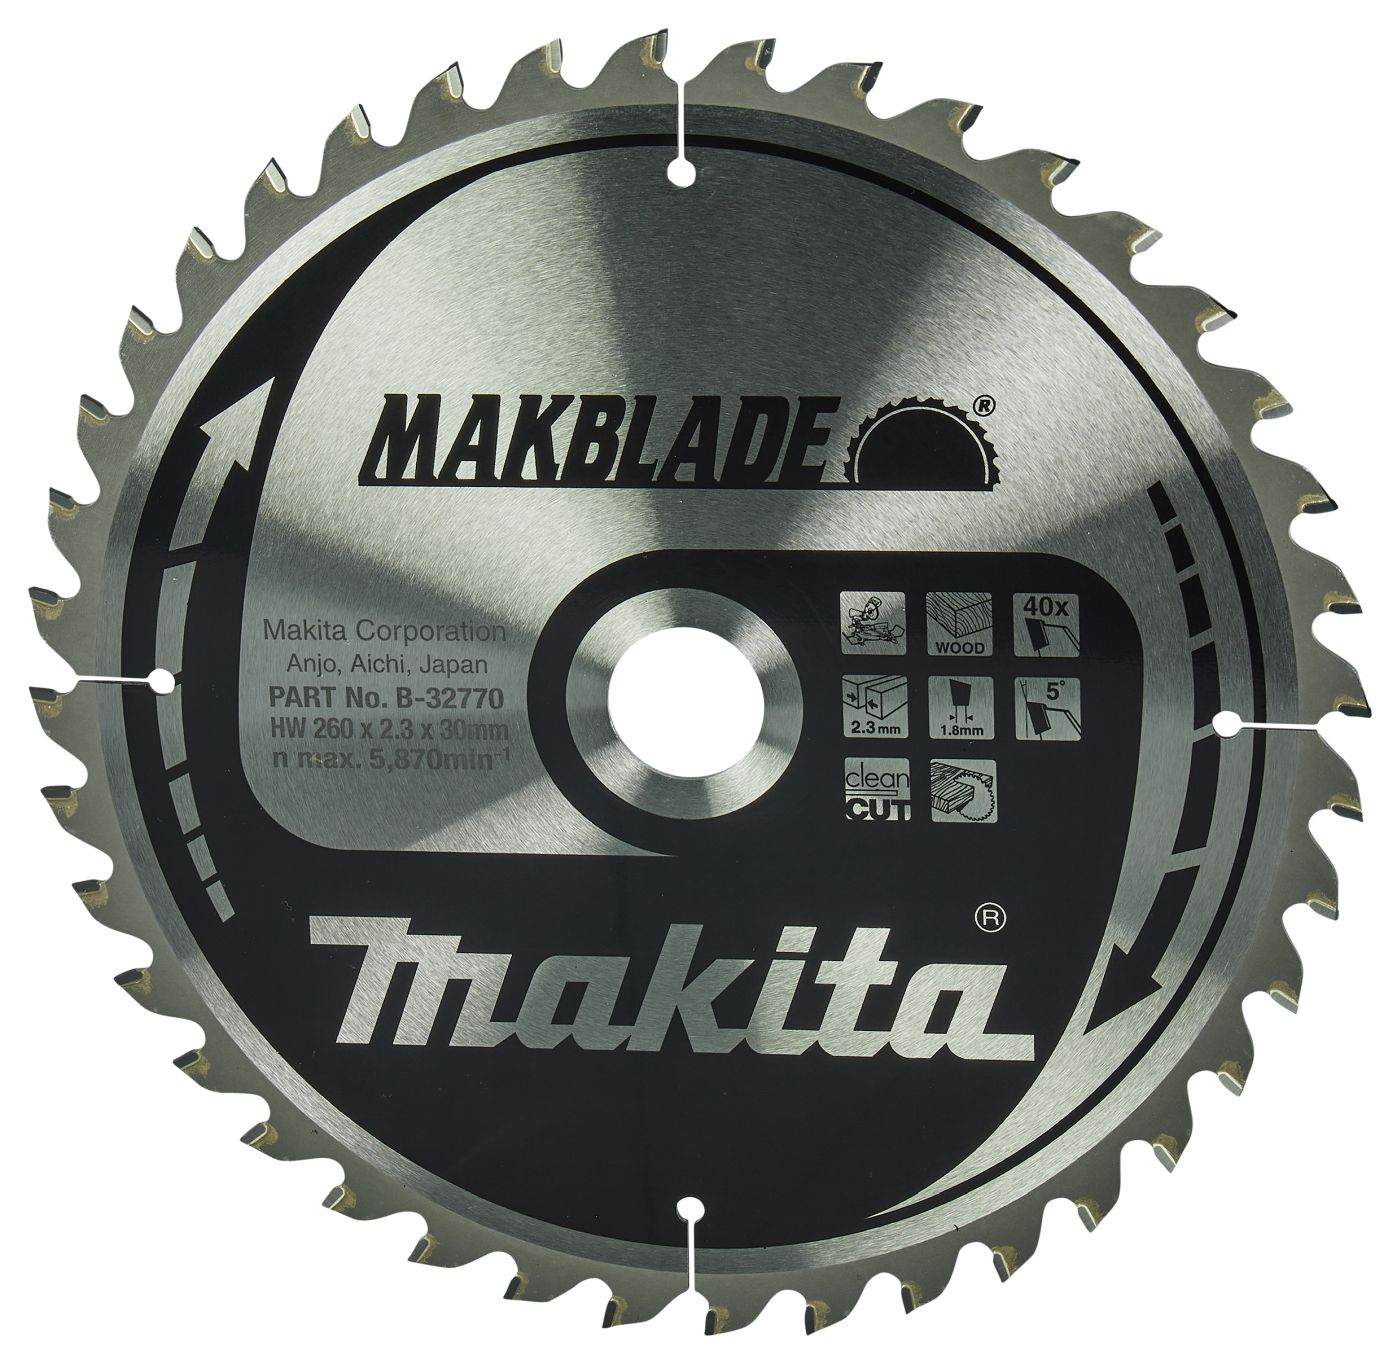 Makita MAKBLADE Sägeblatt 260x30x40Z B-32770